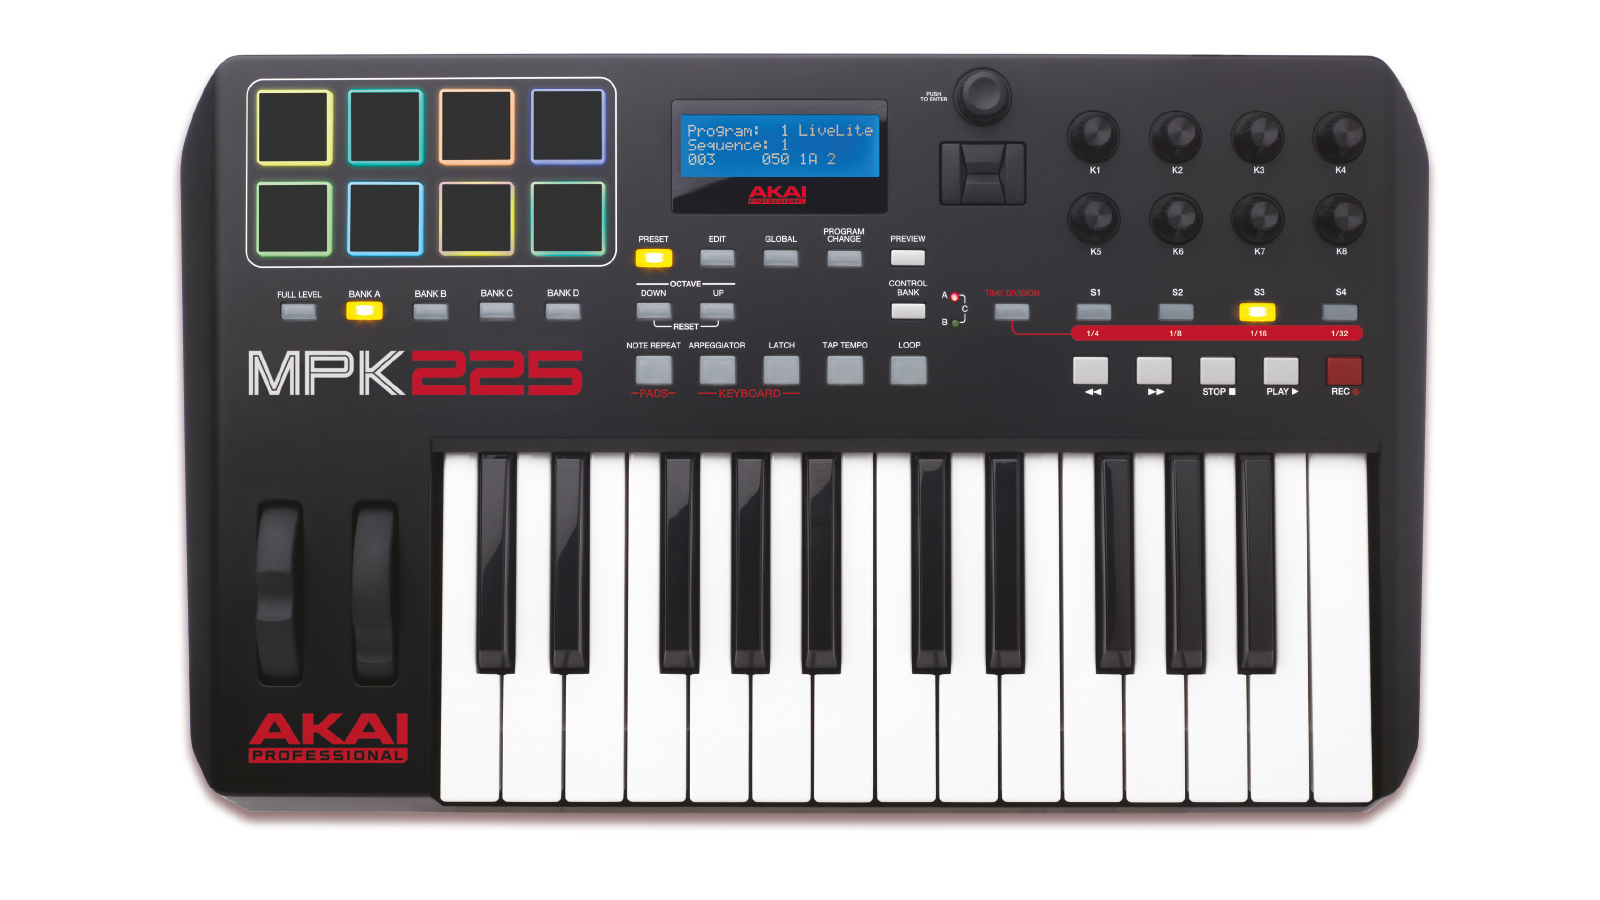 AKAI MPK225 - Compact Keyboard Controller